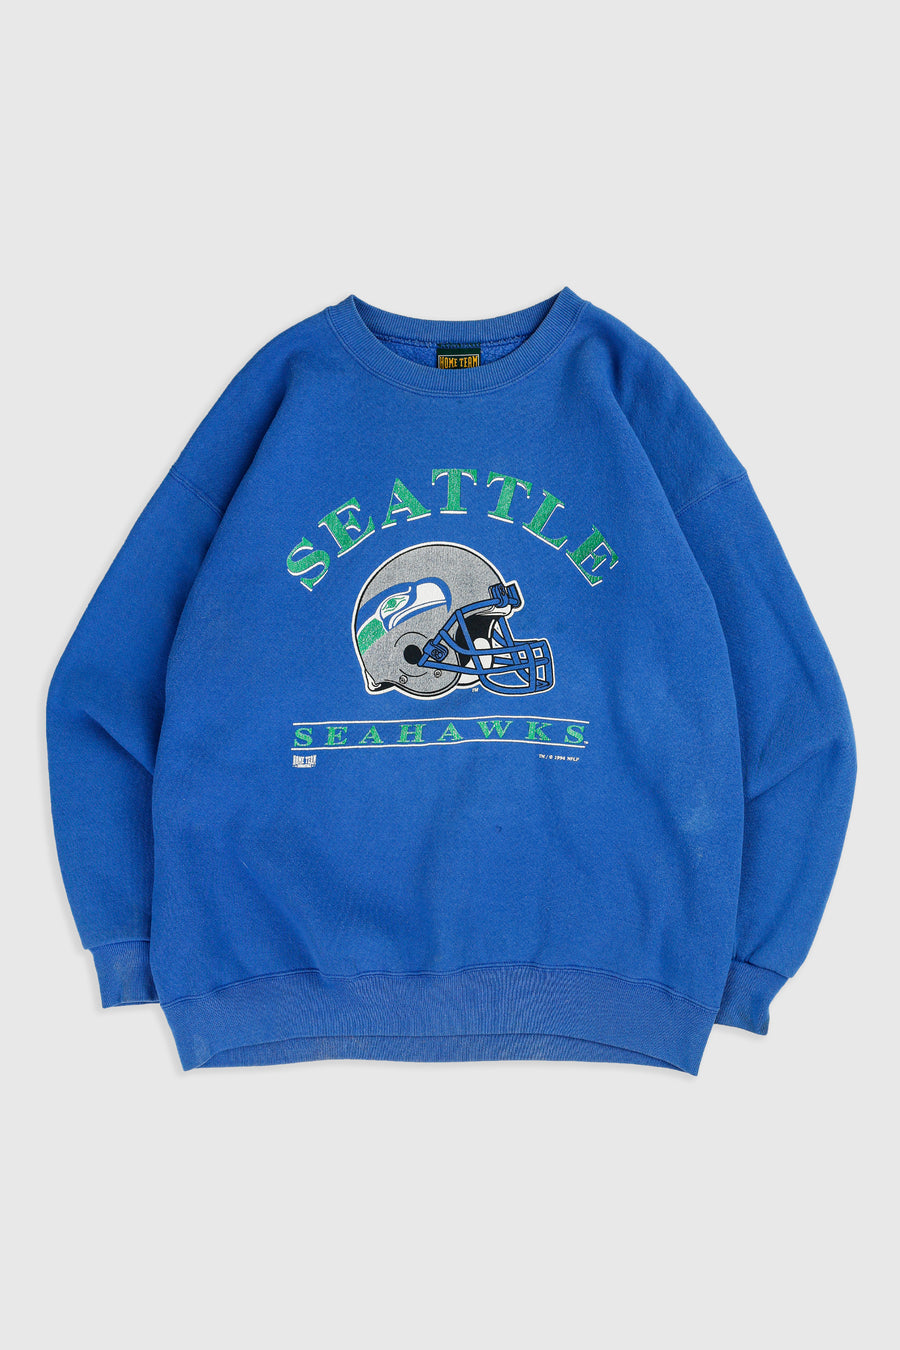 Vintage Seattle Seahawks NFL Sweatshirt - XL